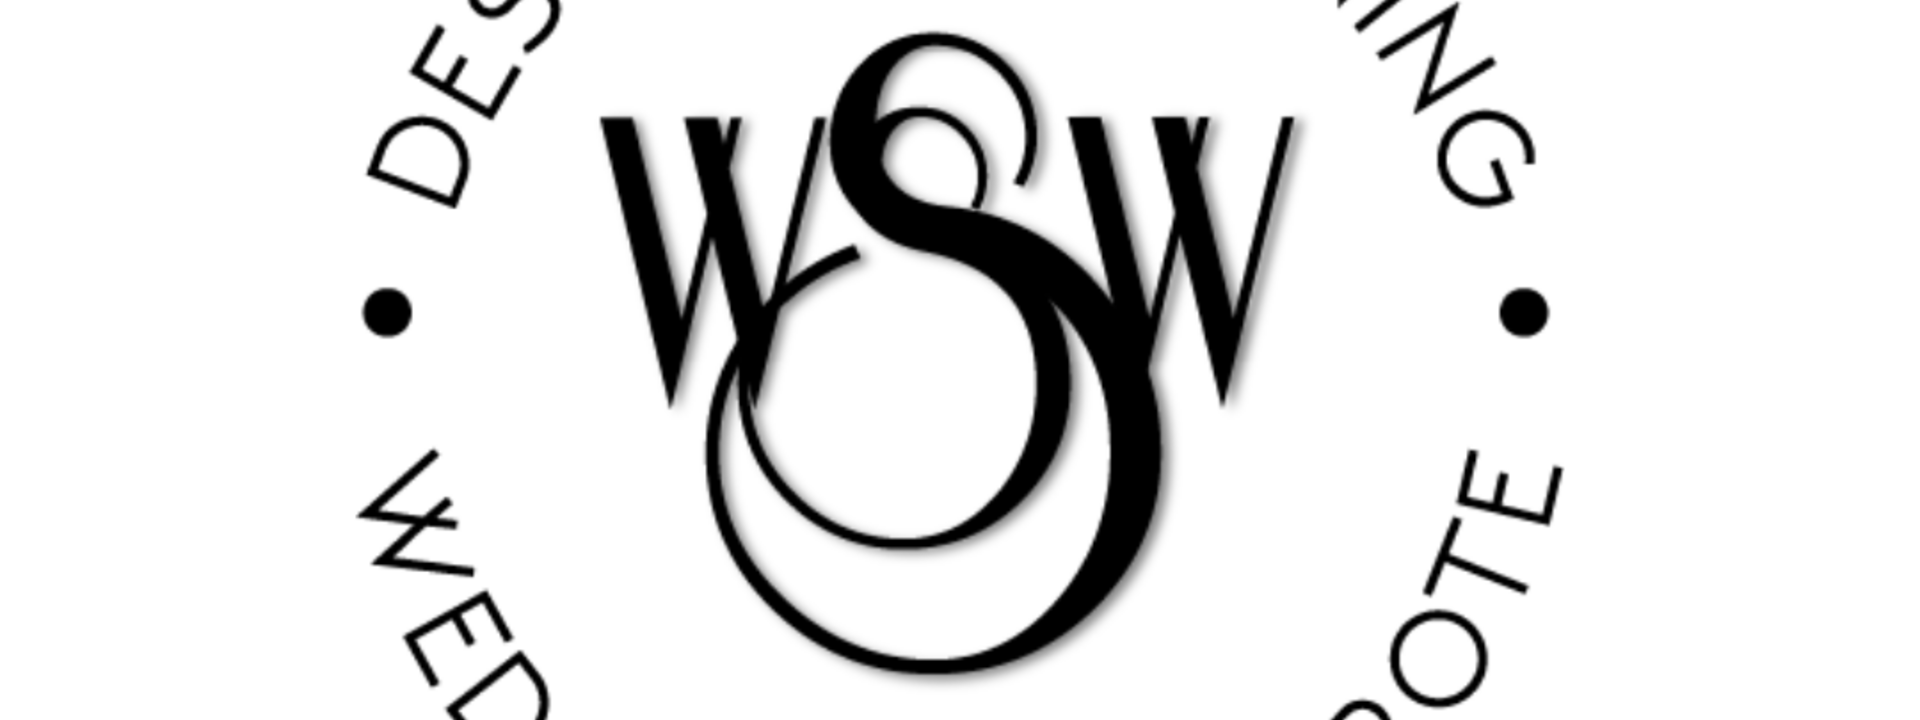 wsw-asset-logo.png